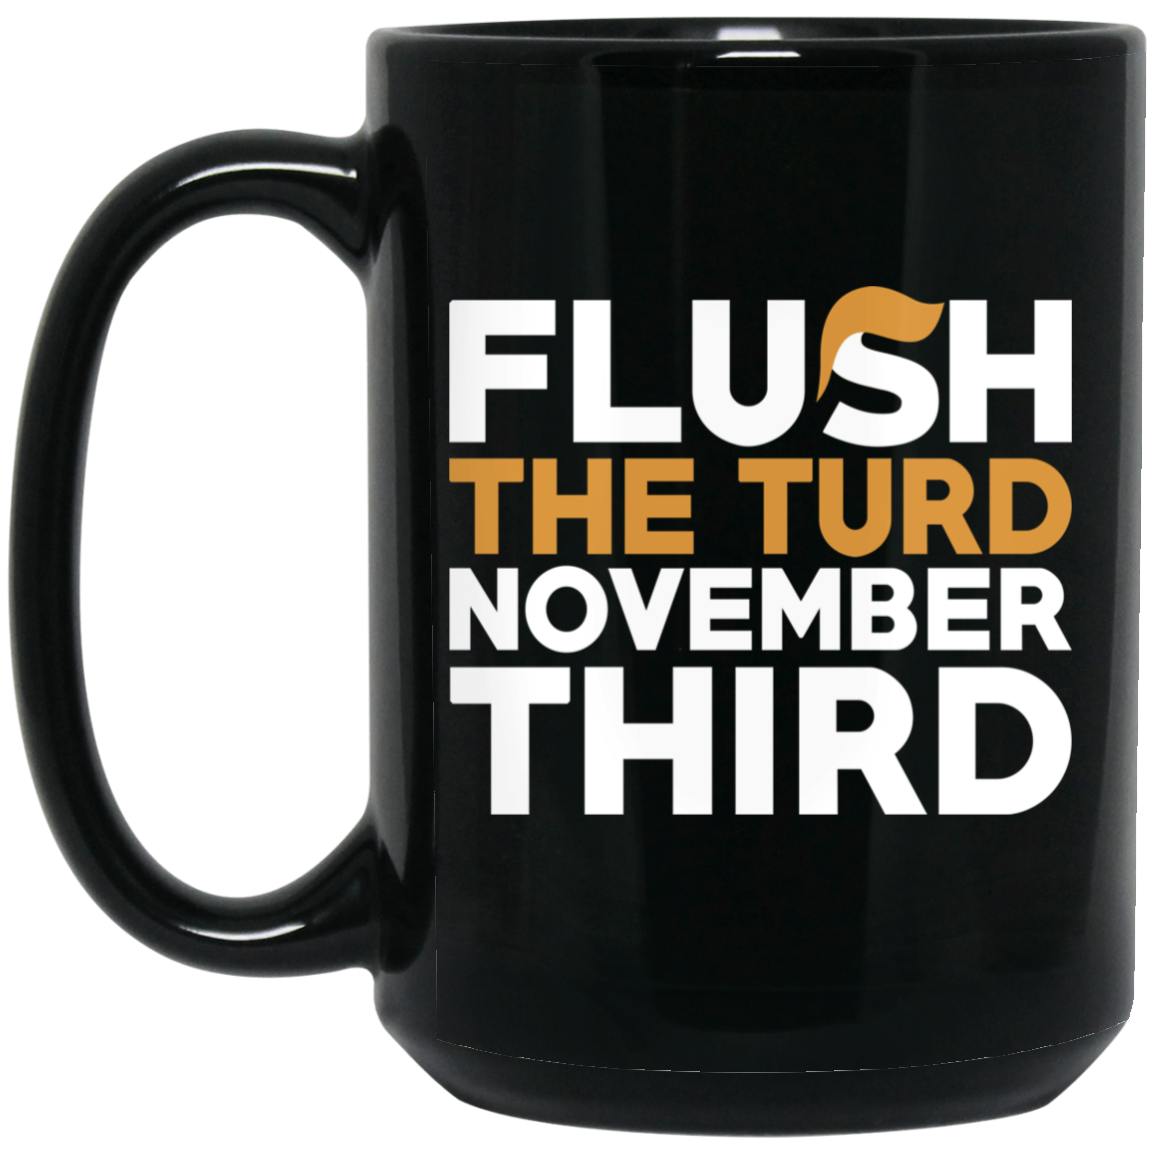 Details about  / Anti-Trump Coffee Mug Flush The Turd Nov 3rd Mug Funny Political Gifts